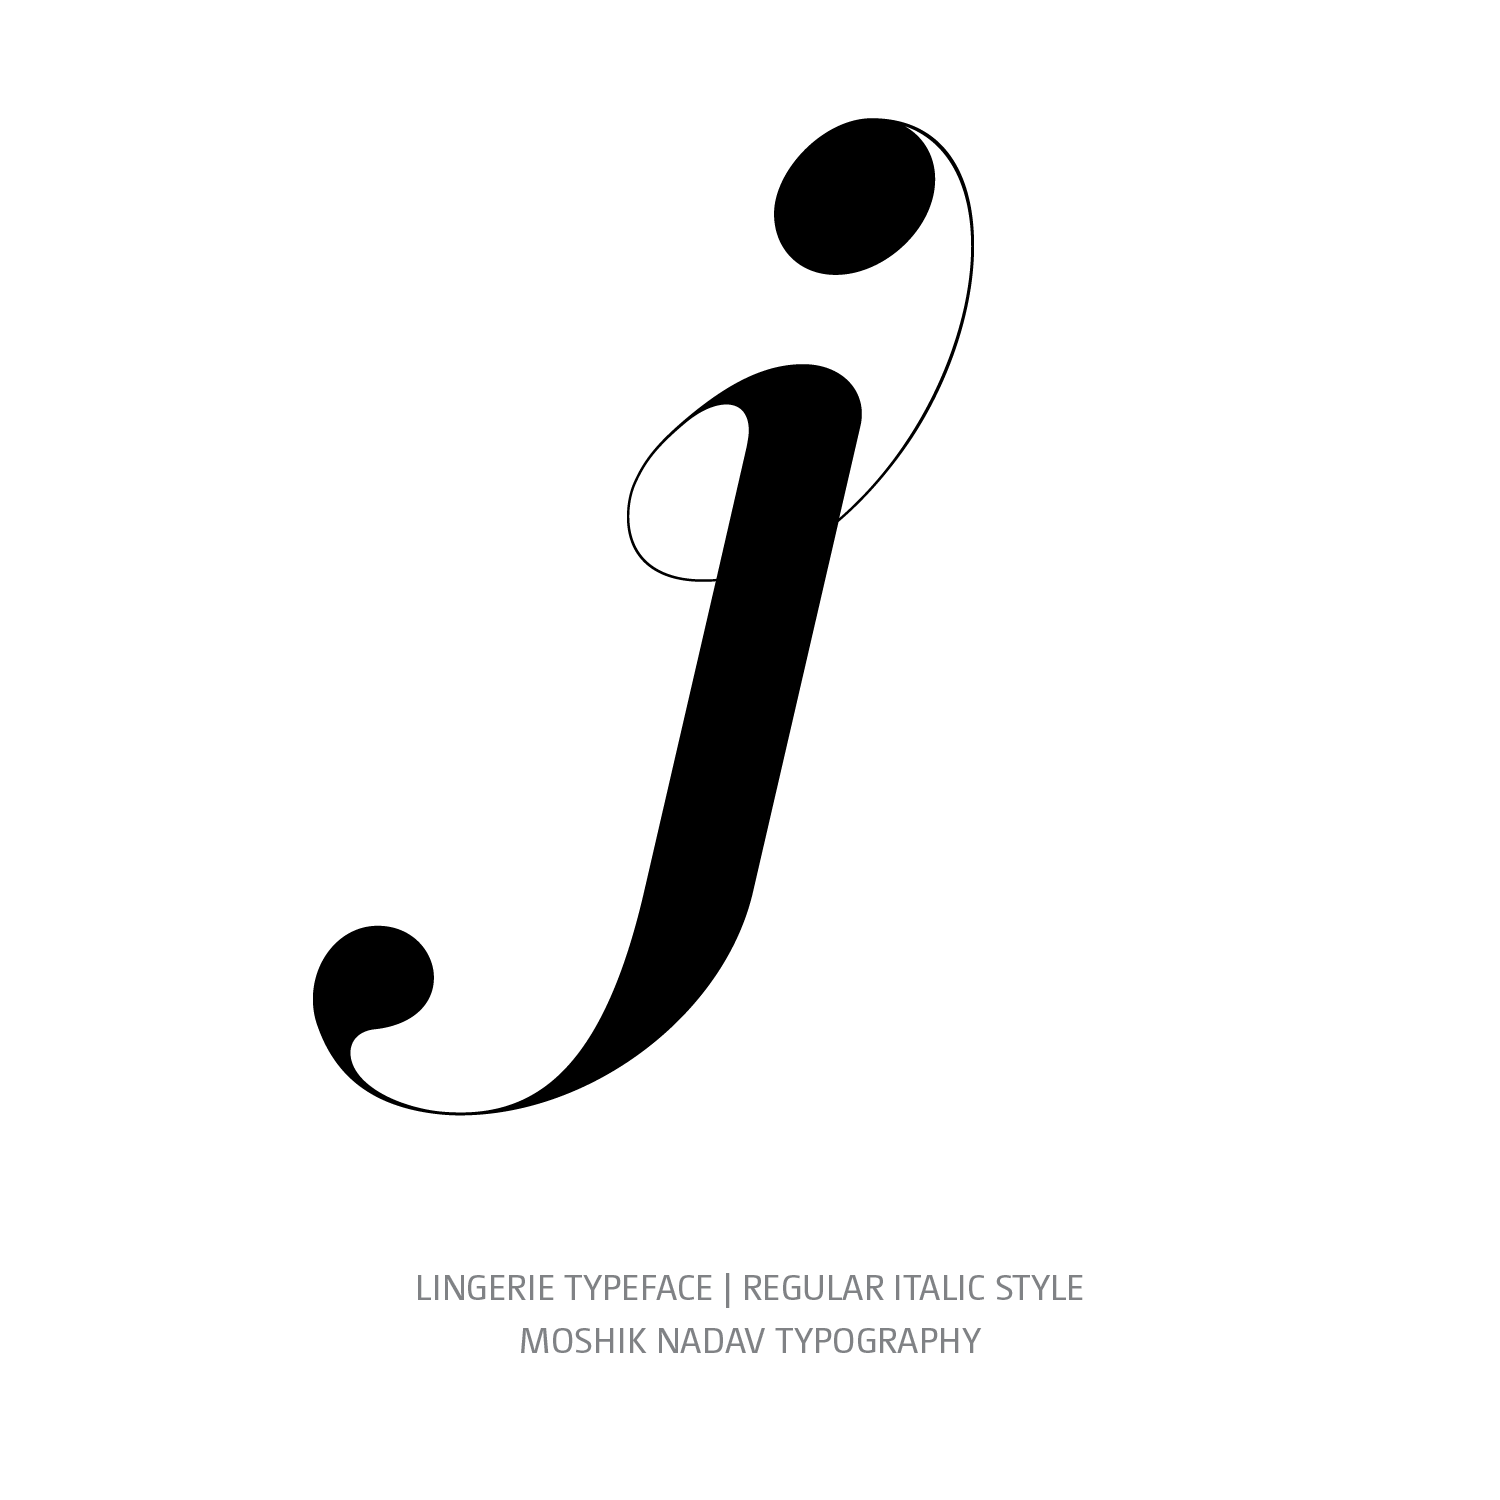 Lingerie Typeface Regular Italic j - Fashion fonts by Moshik Nadav Typography